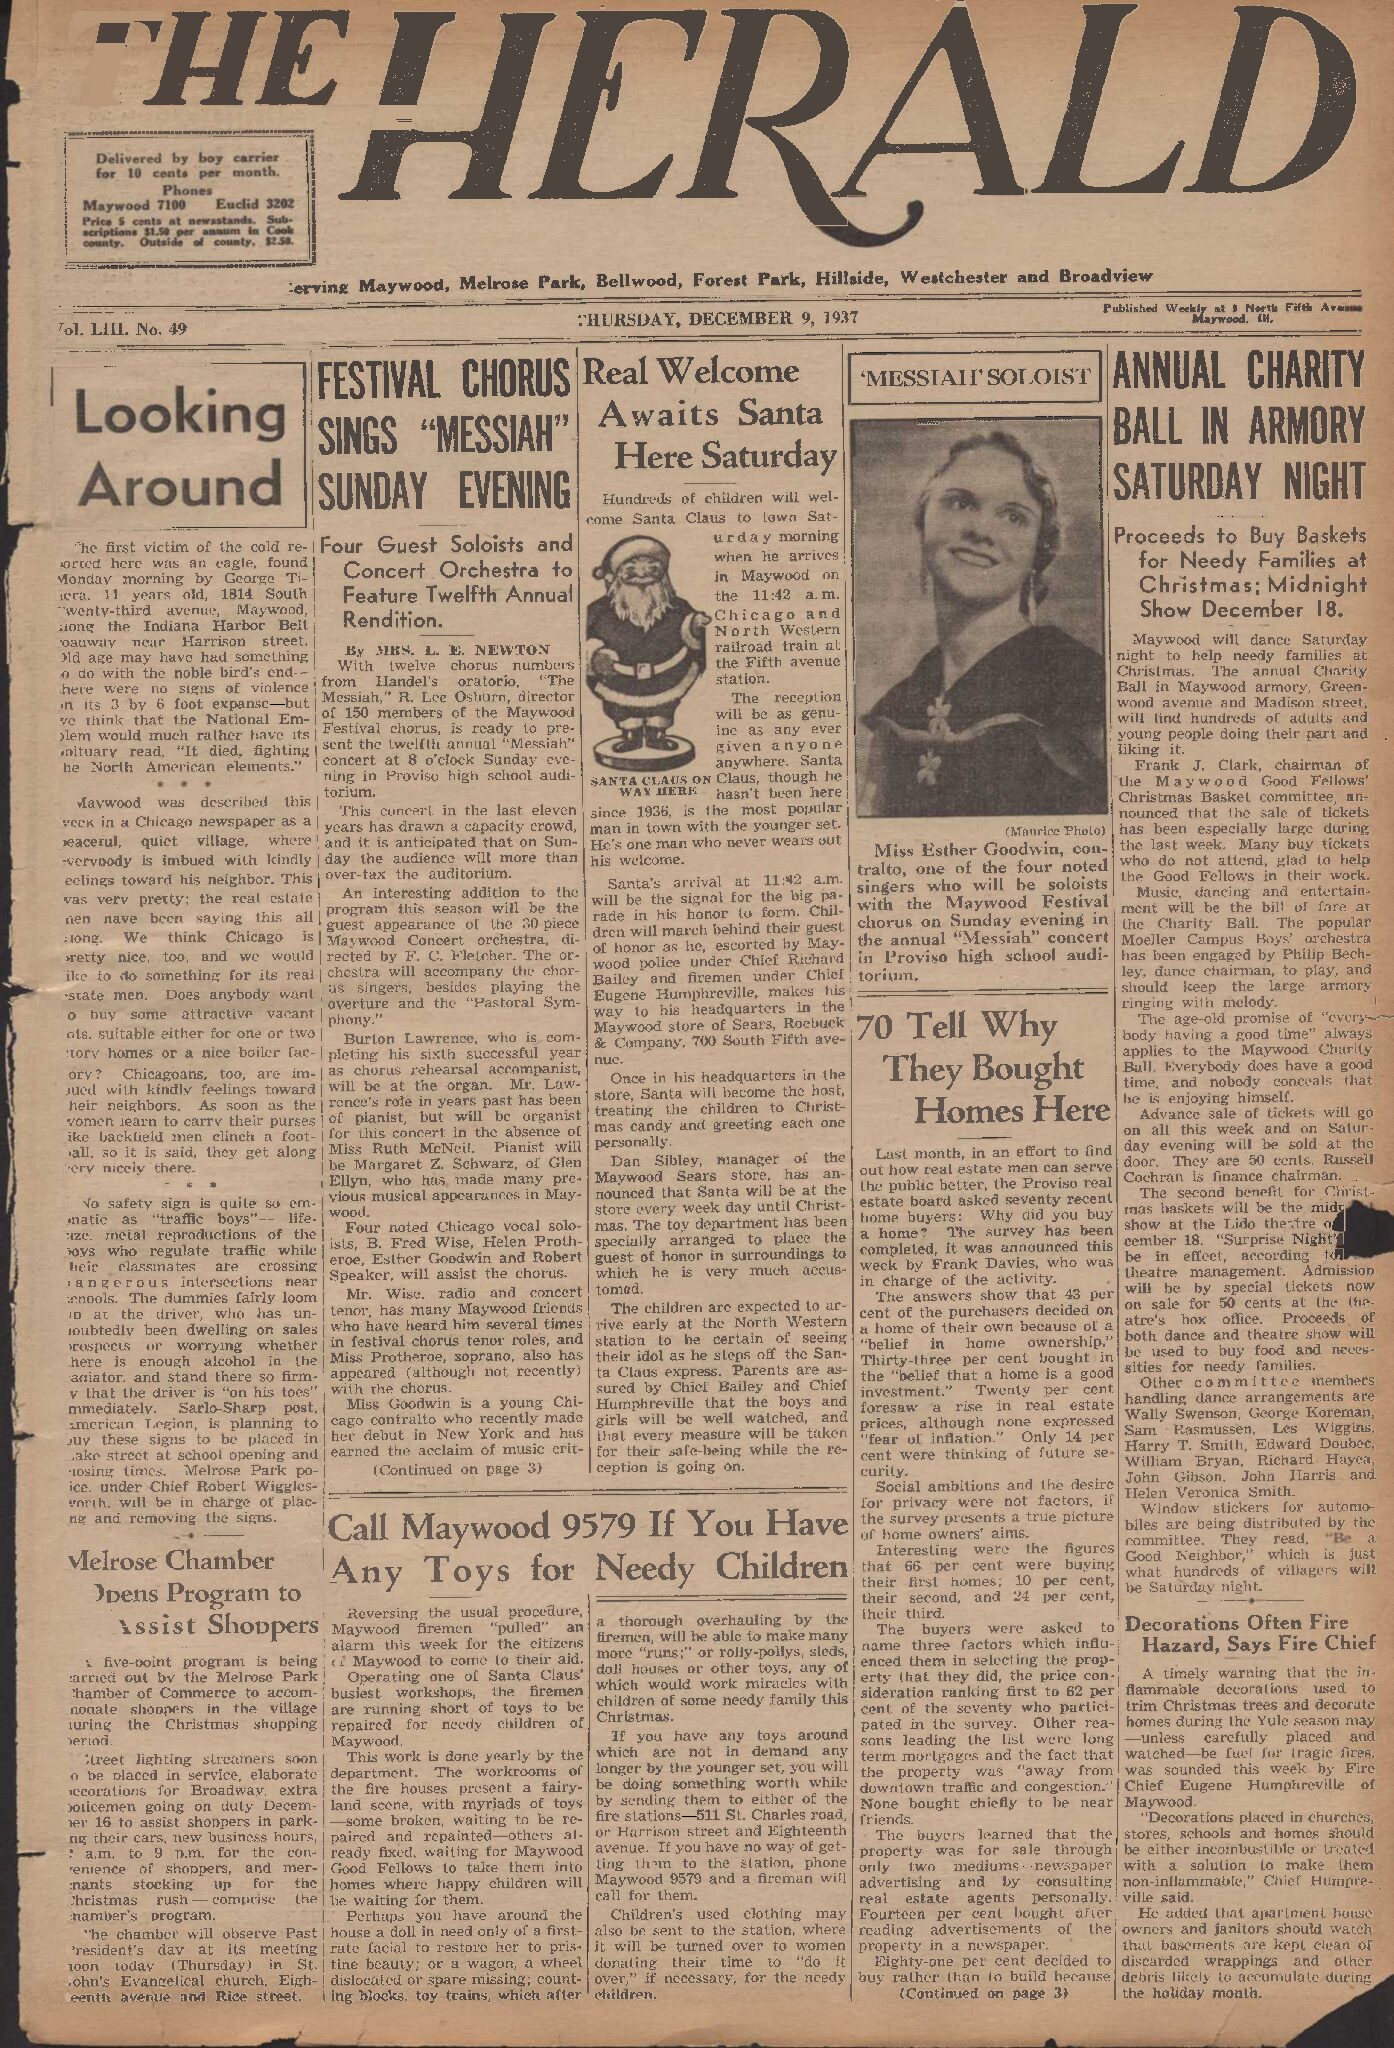 The Herald – 19371209